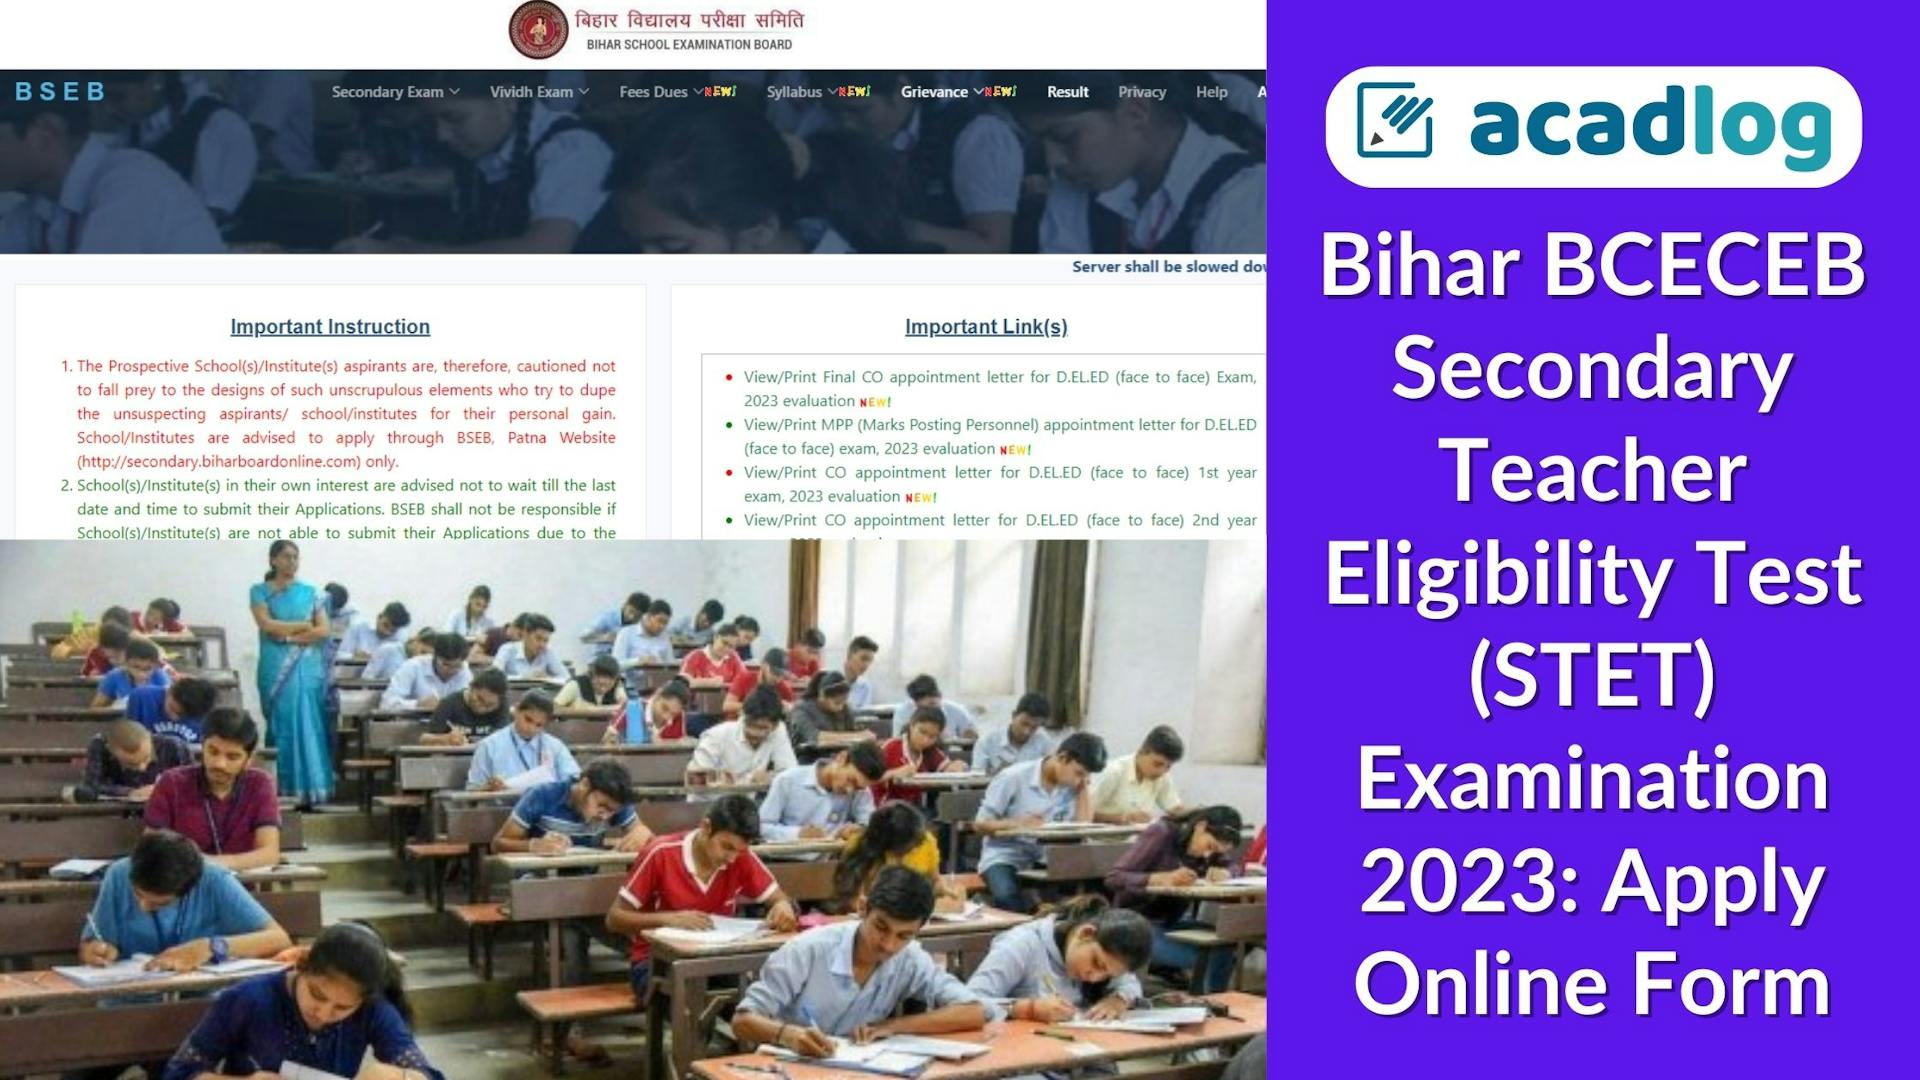 Bihar BCECEB Secondary Teacher Eligibility Test(STET) Examination 2023: Apply Online Form